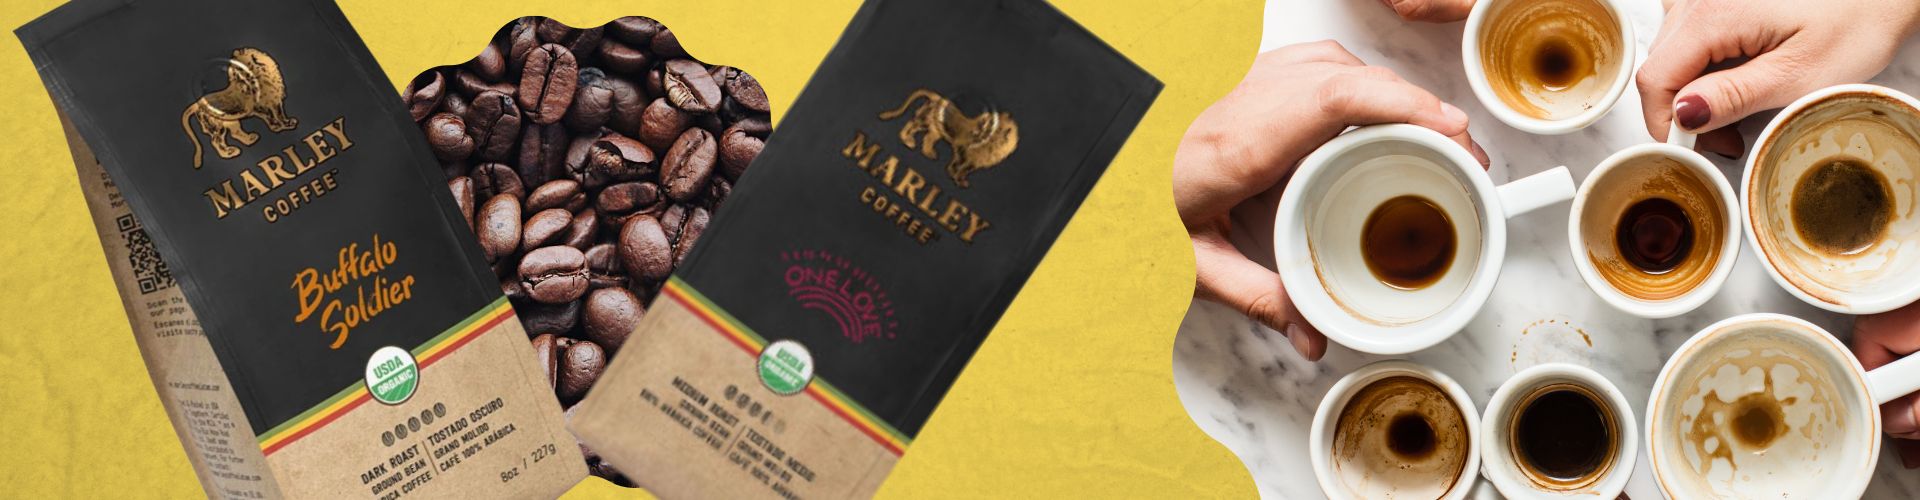 Marley Coffee, sabor y aroma